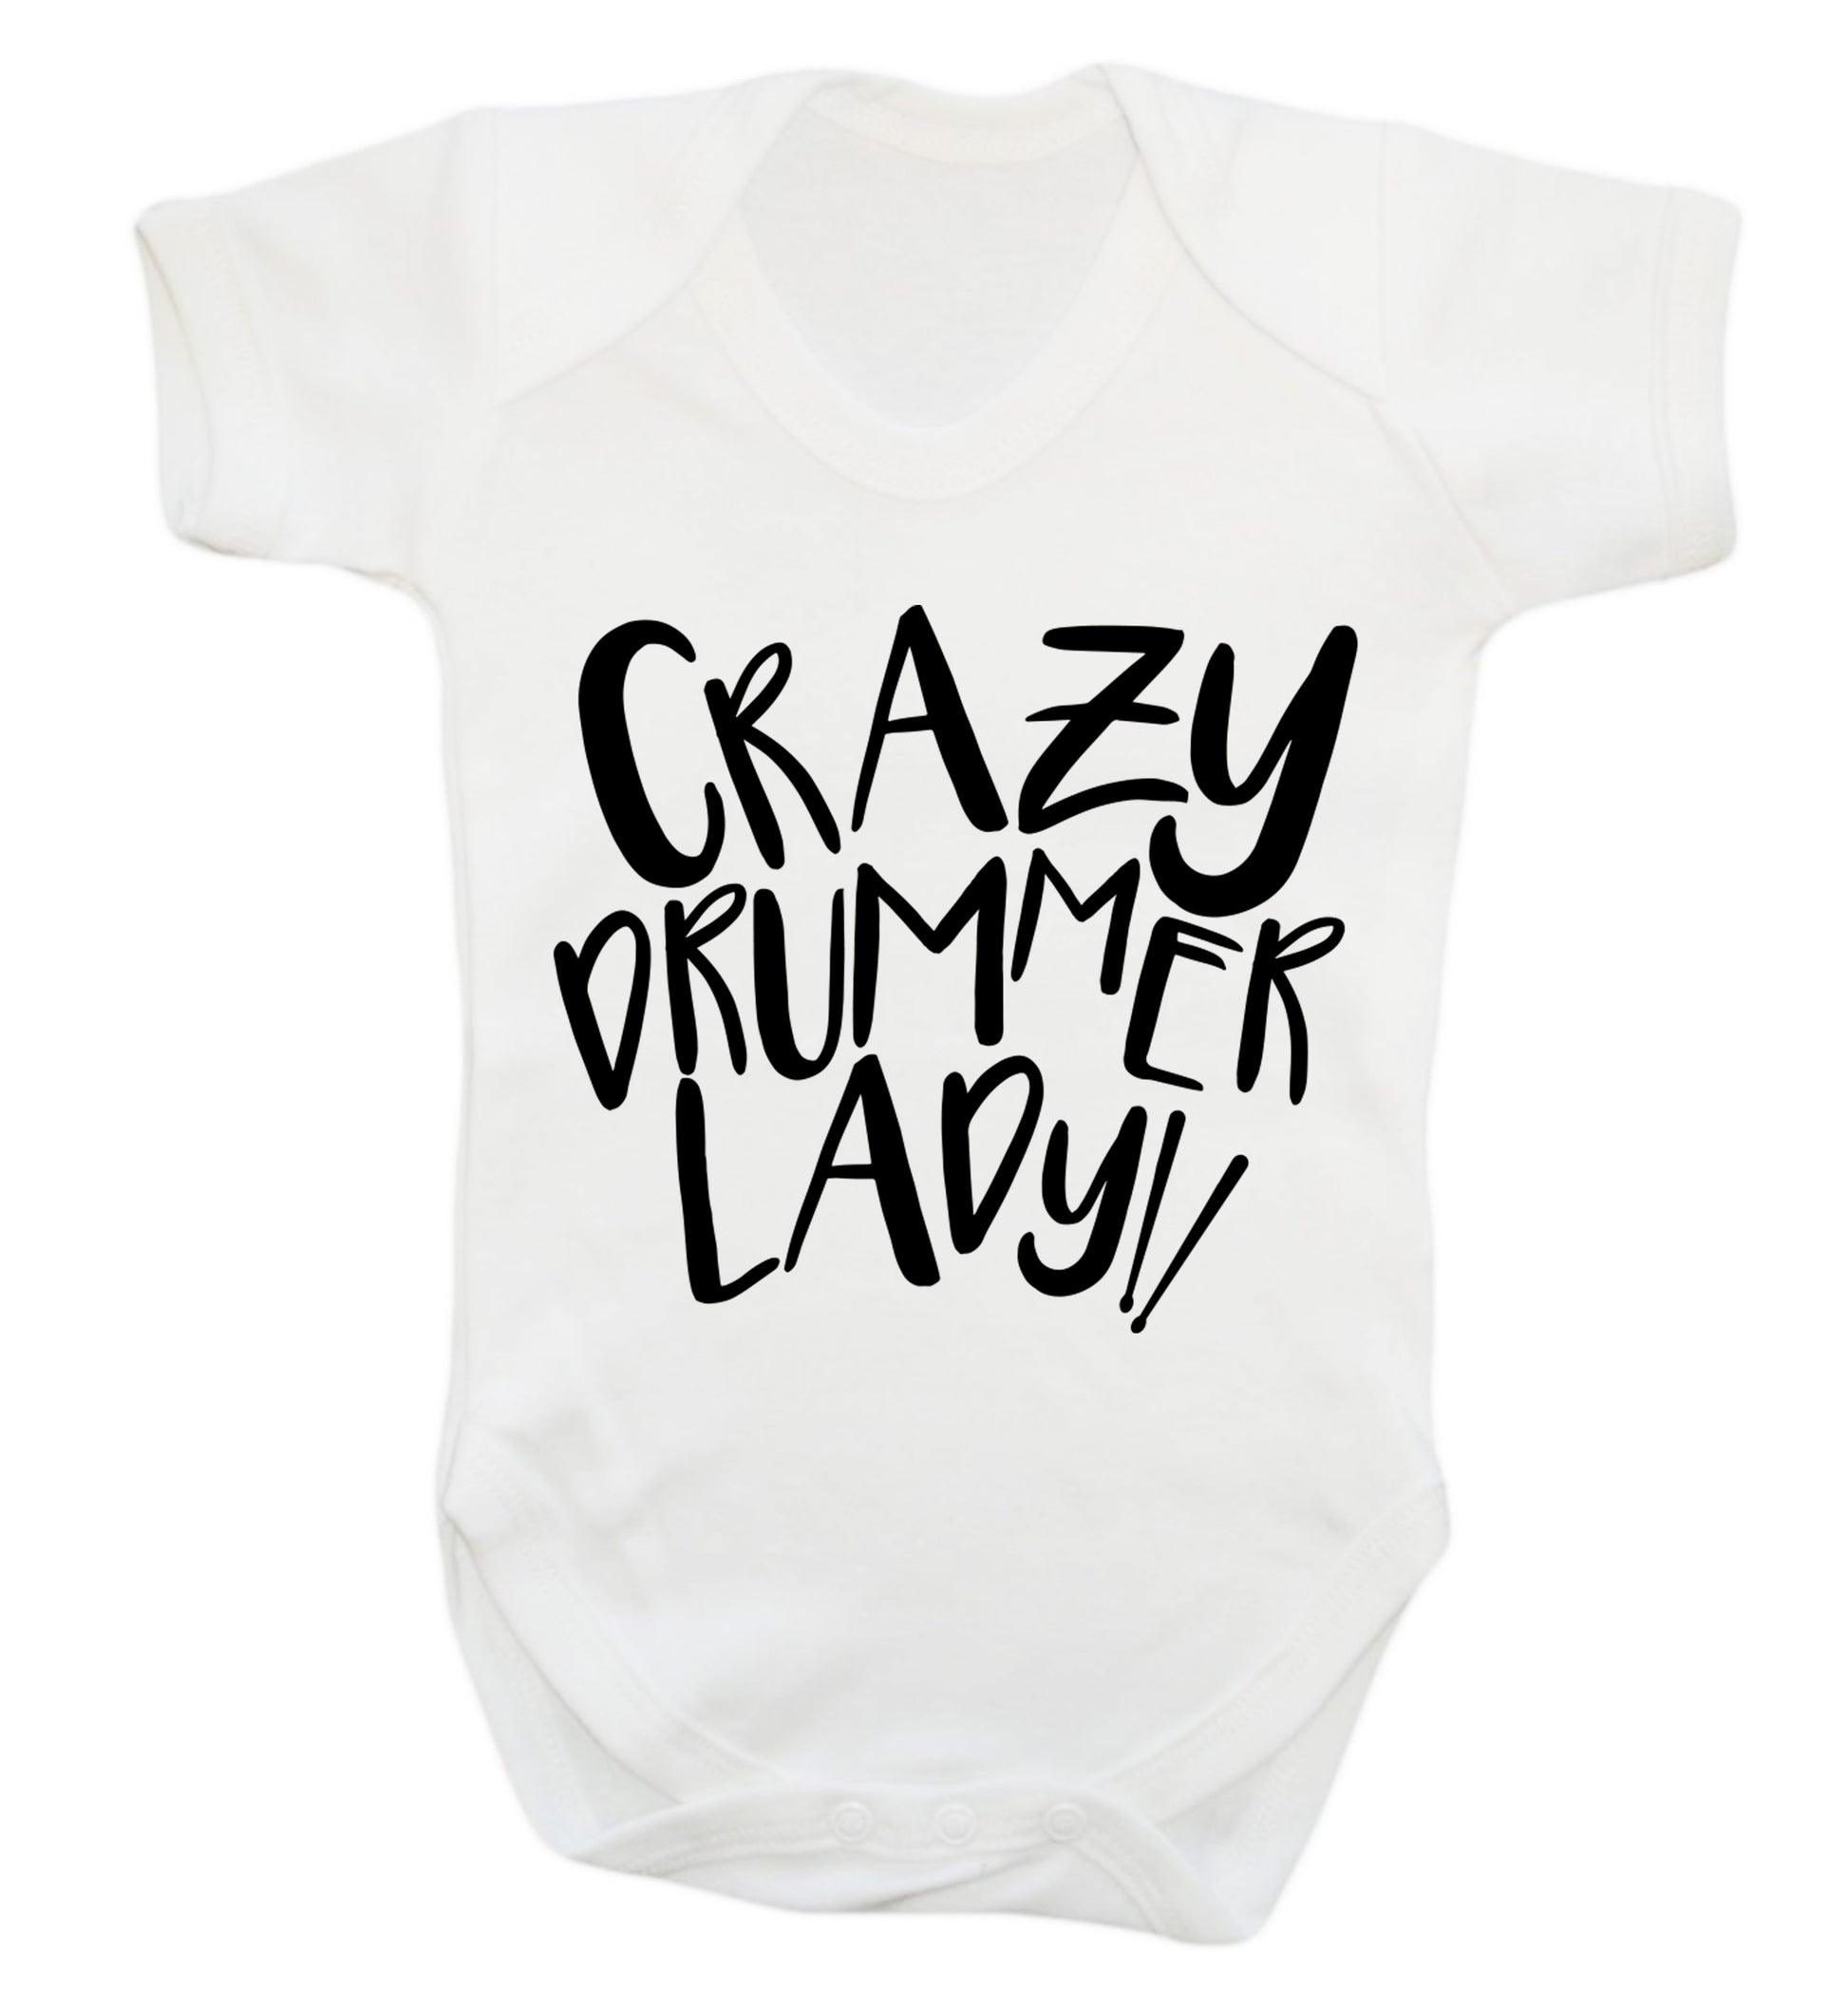 Crazy drummer lady Baby Vest white 18-24 months